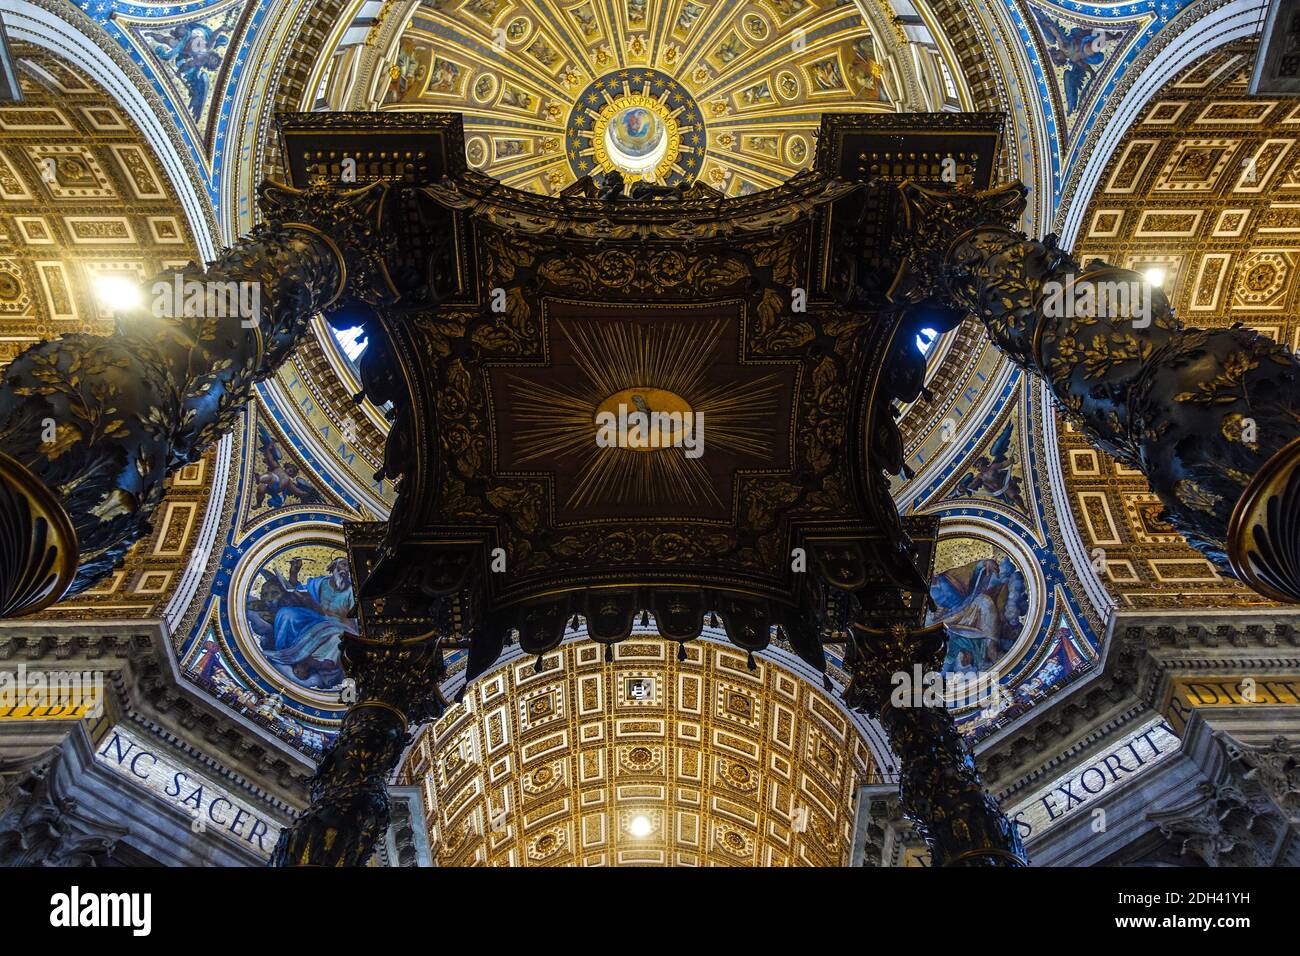 Baldachino altar from below in St Peter's basilica, Rome, Italy, Basilica di San Pietro interior Stock Photo